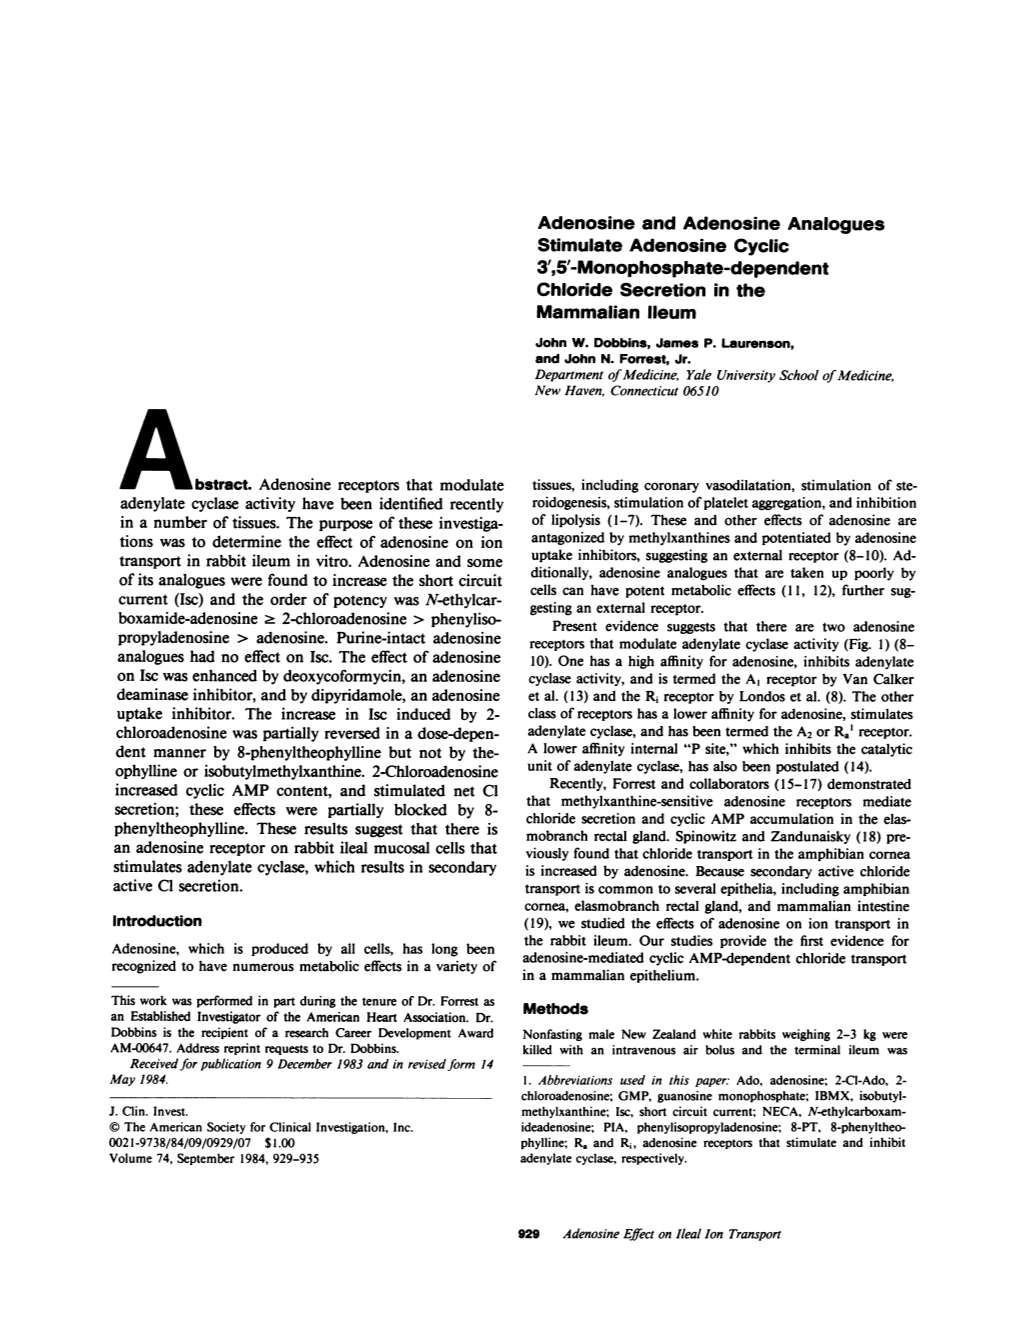 Monophosphate-Dependent Chloride Secretion in the Mammalian Ileum John W